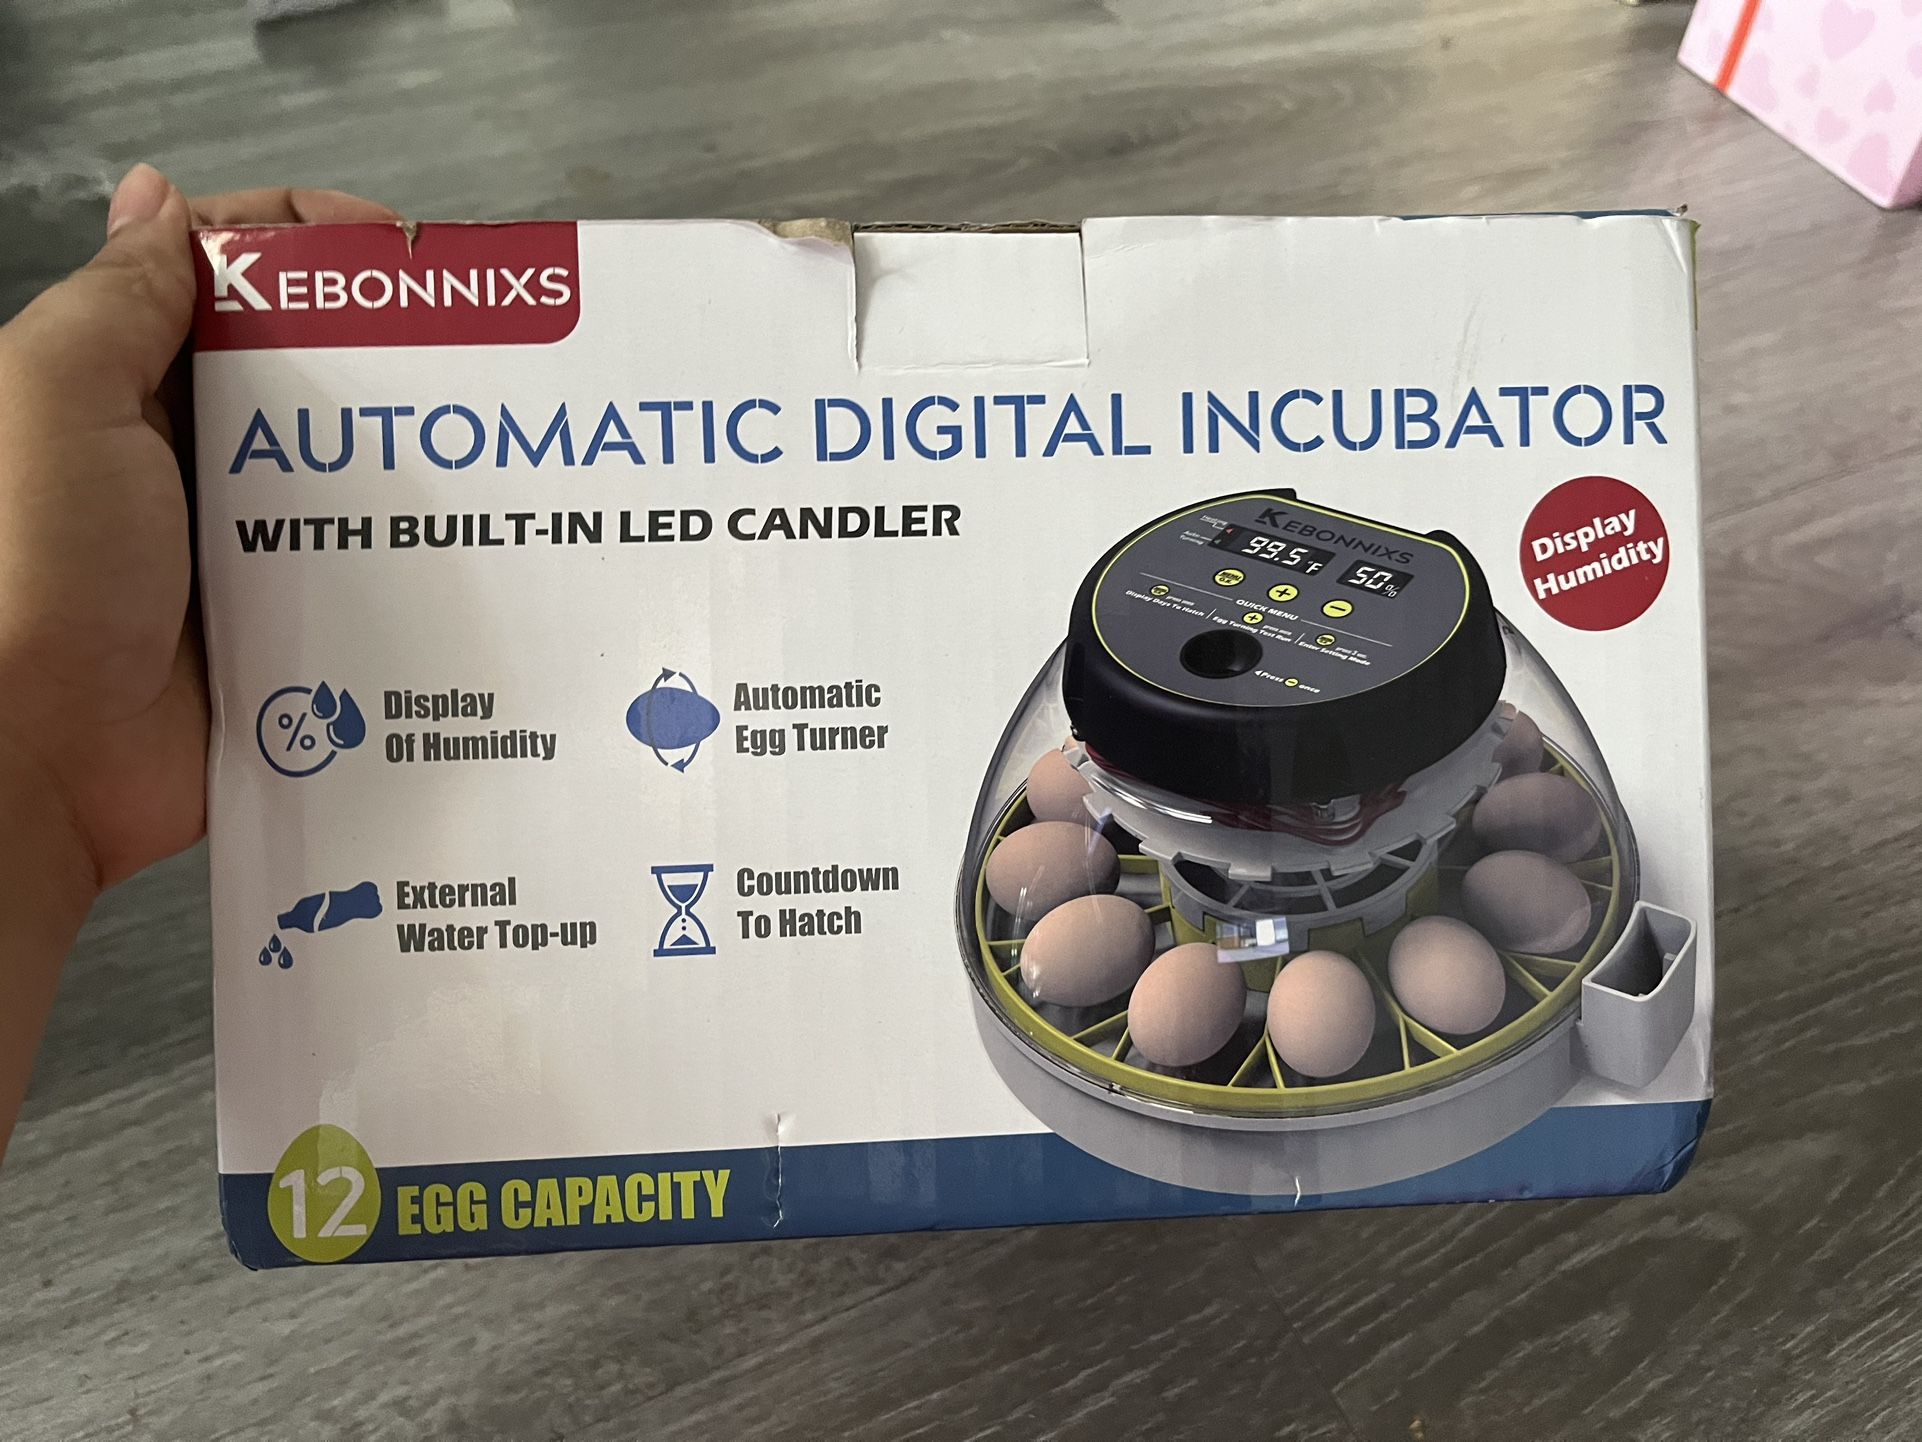 Kebonnix Automatic Digital Incubator